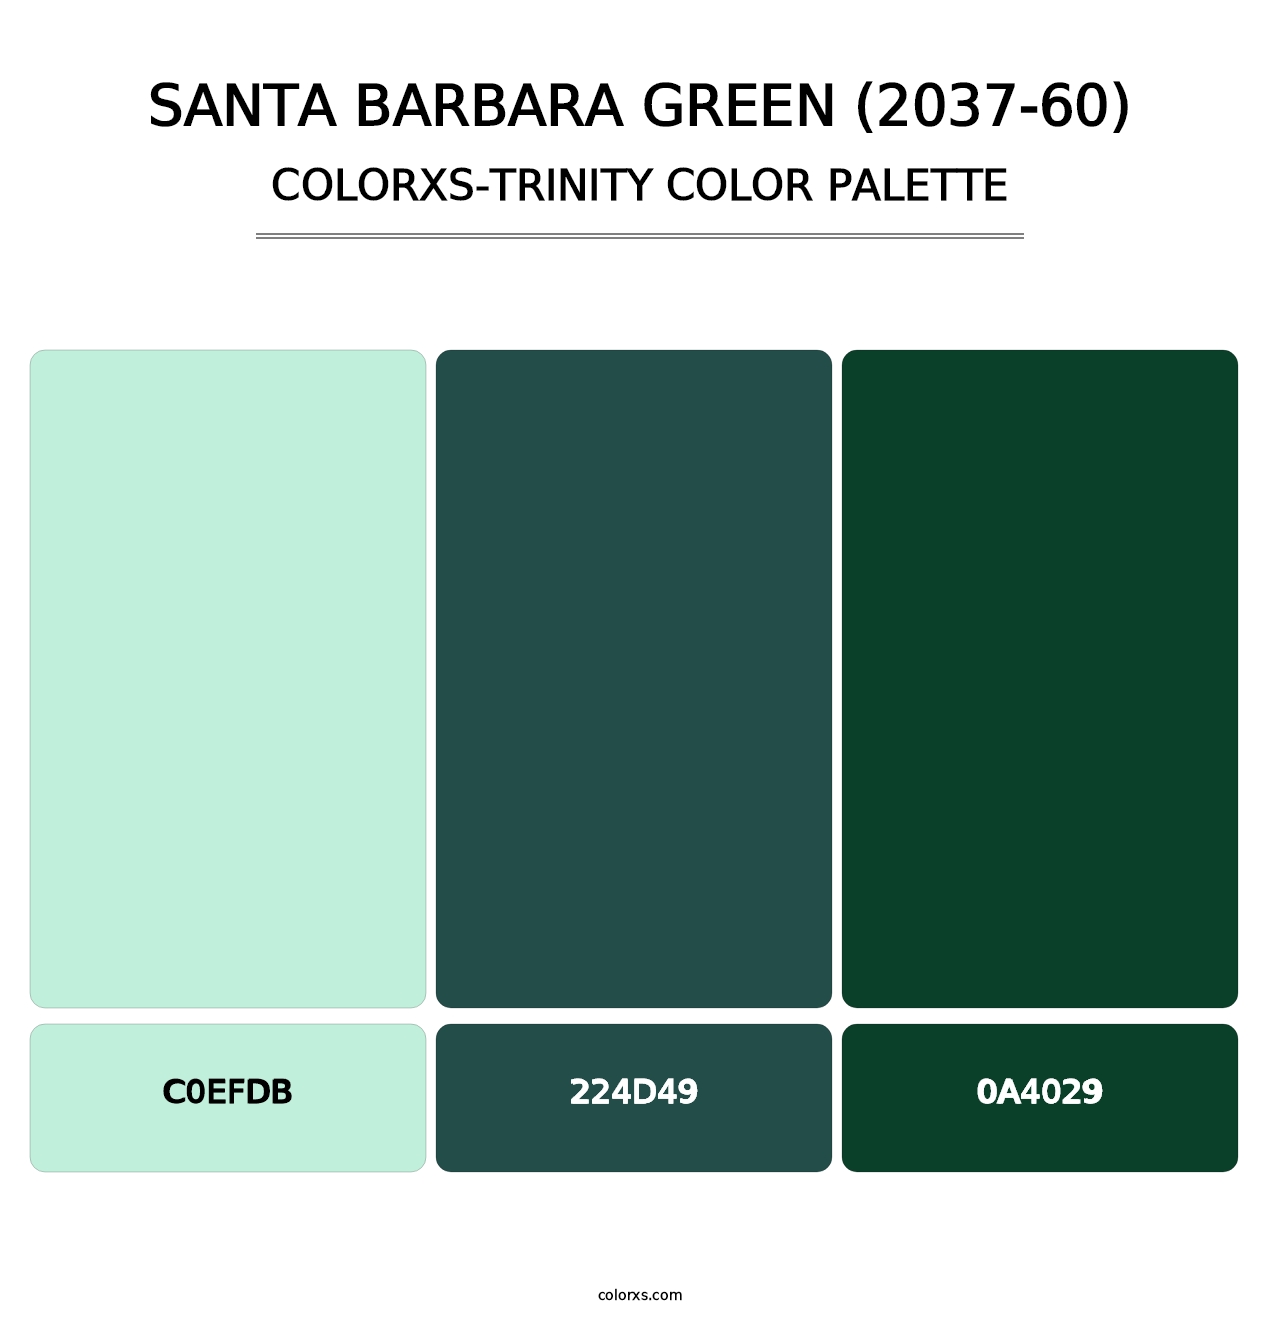 Santa Barbara Green (2037-60) - Colorxs Trinity Palette